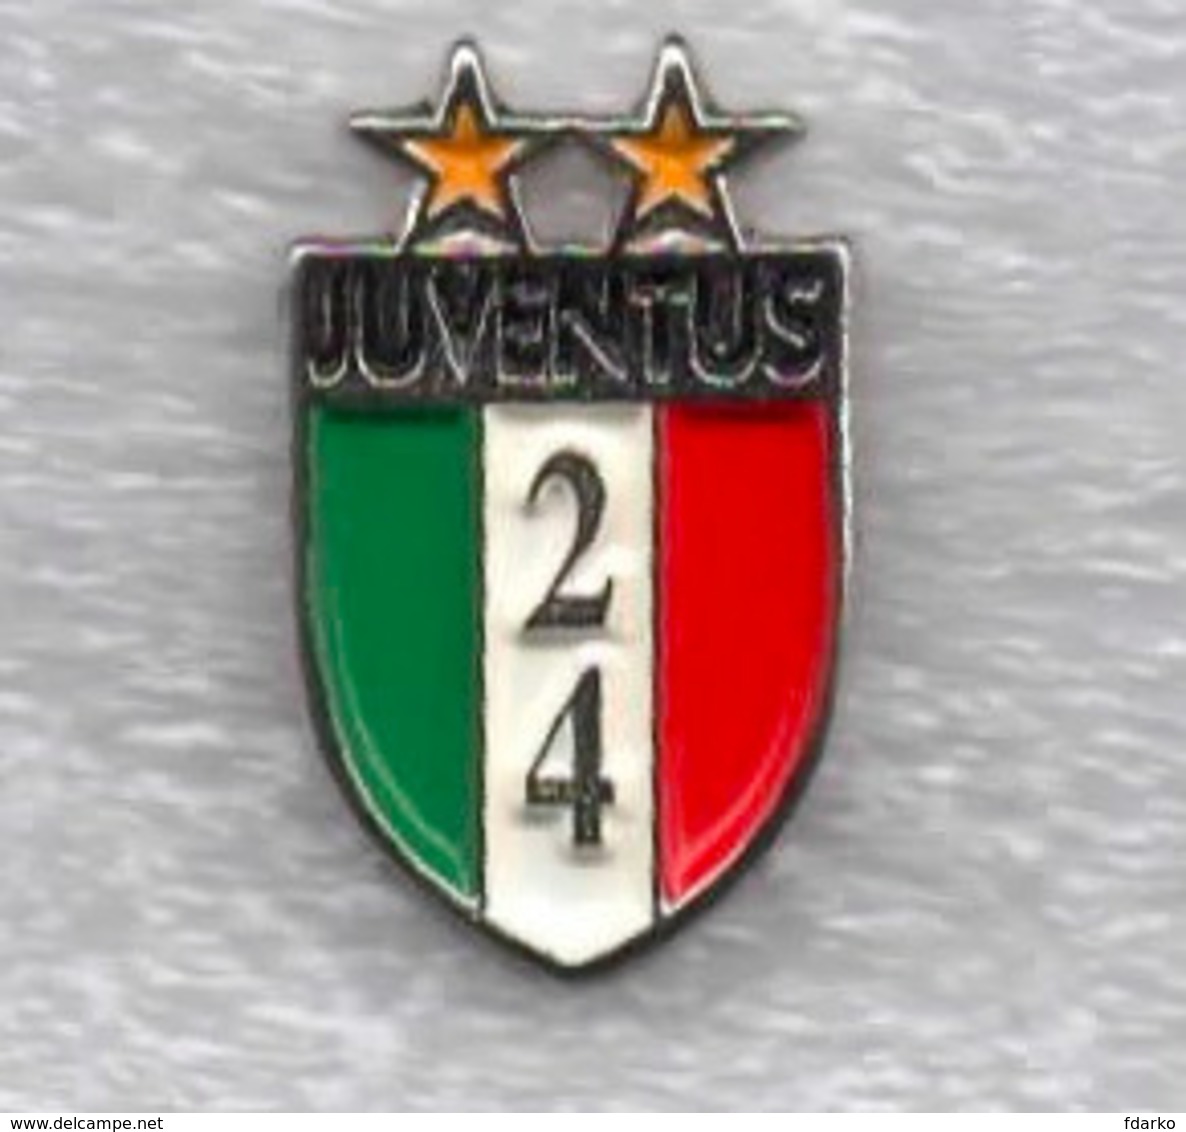 Juventus Torino Calcio 24° Scudetto Juve Ufficiale Giemme Torino Soccer Pins Spilla Italy Toro Granata - Football